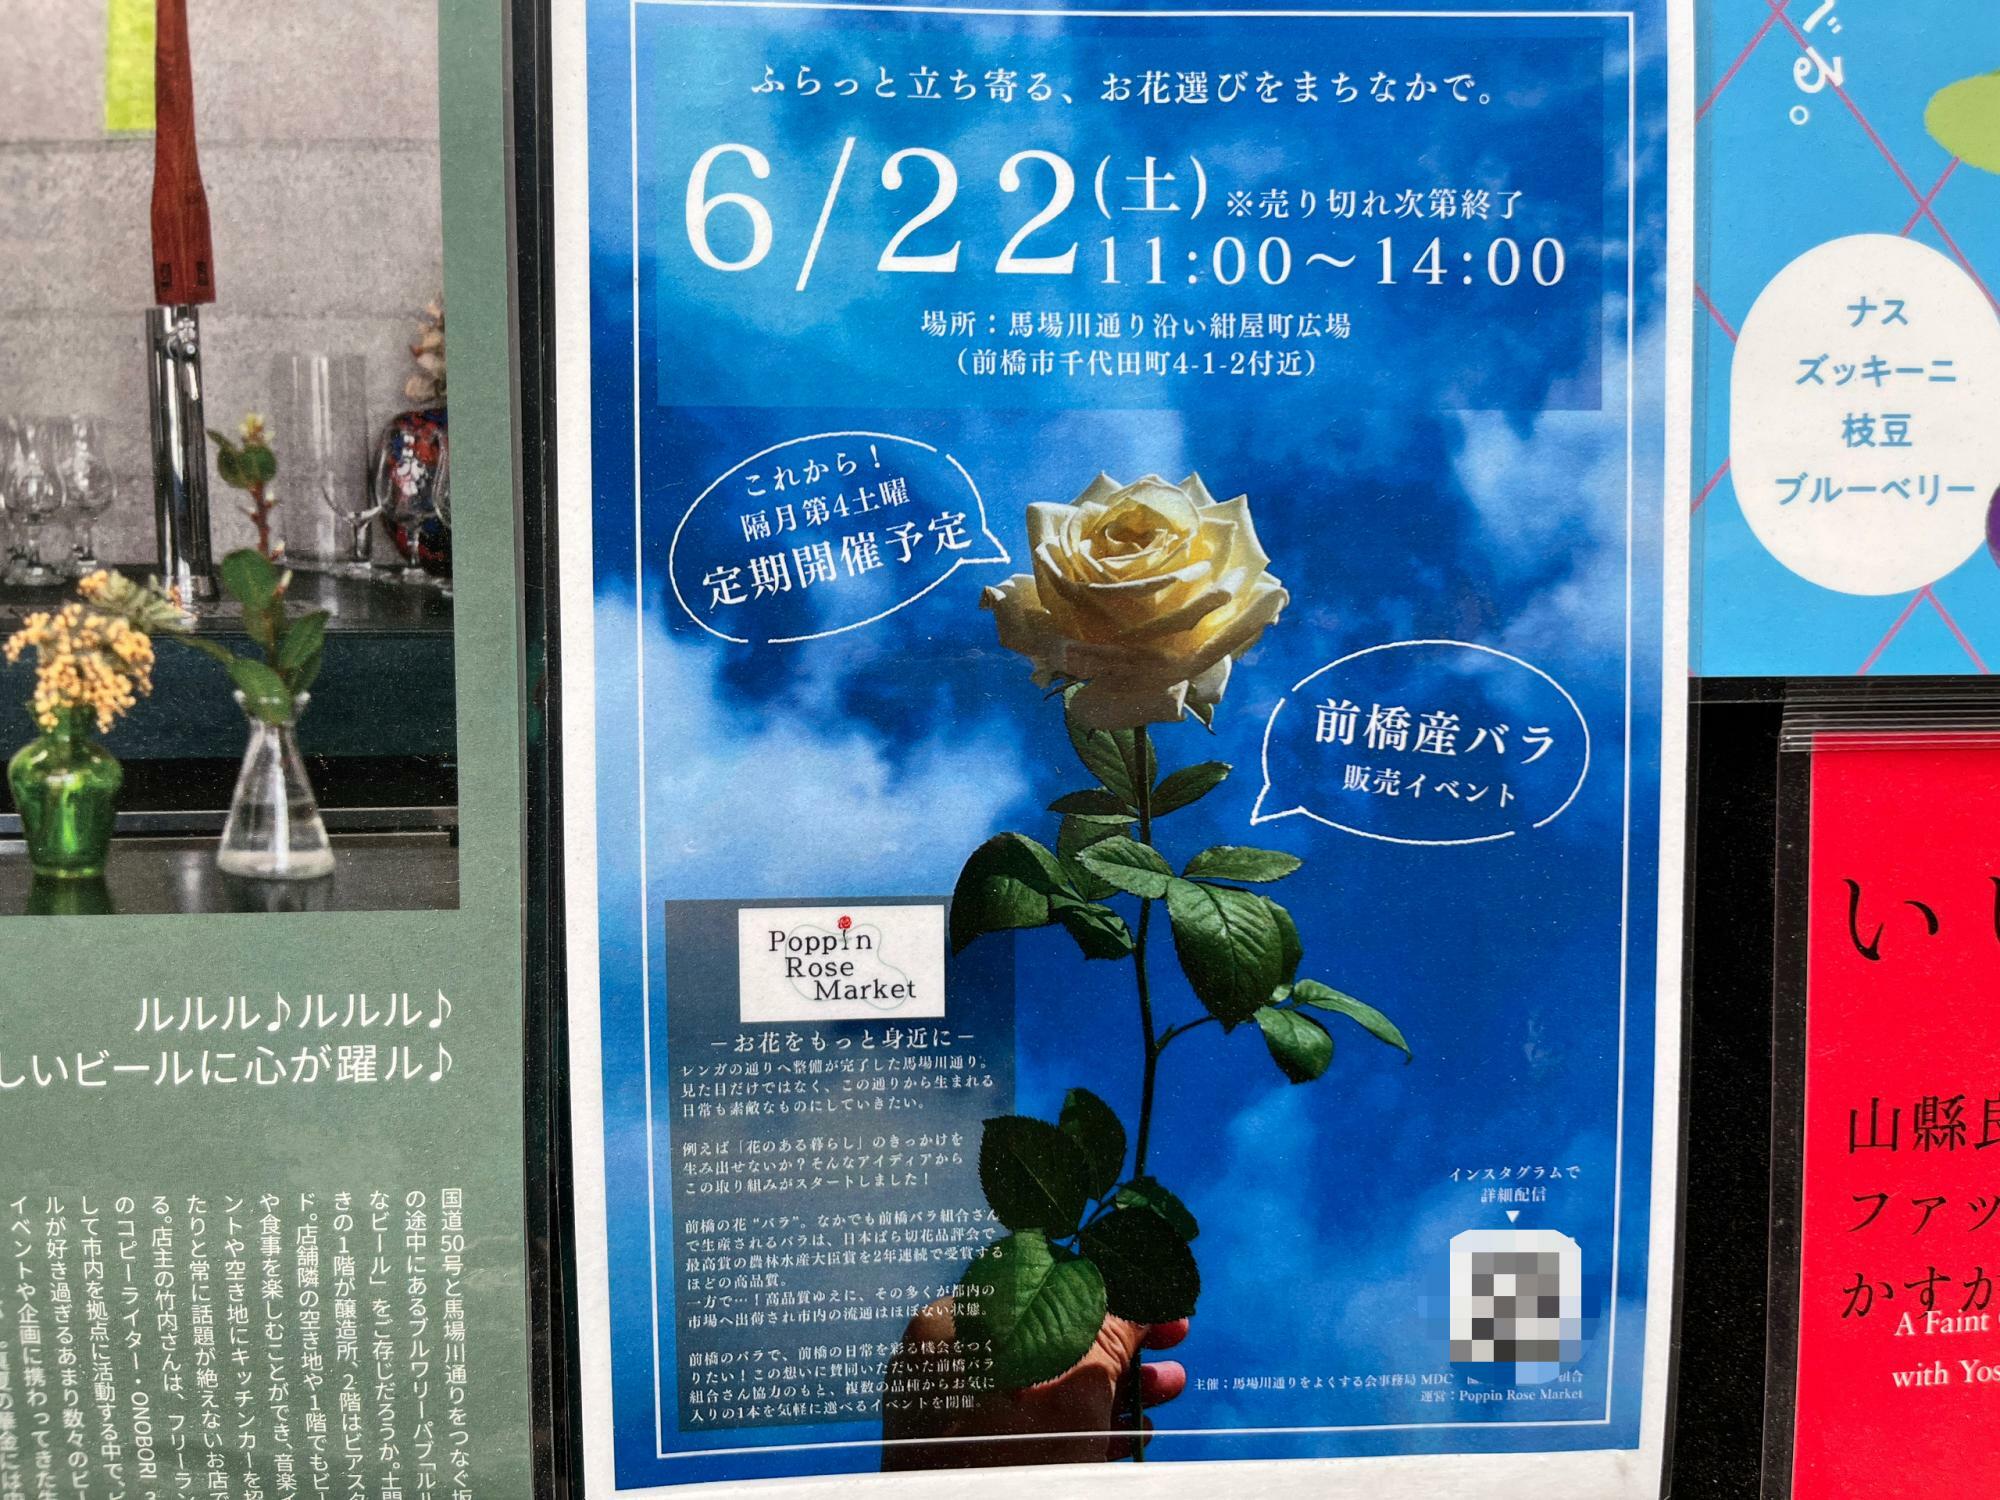 「Poppin Rose Market」開催告知のポスター